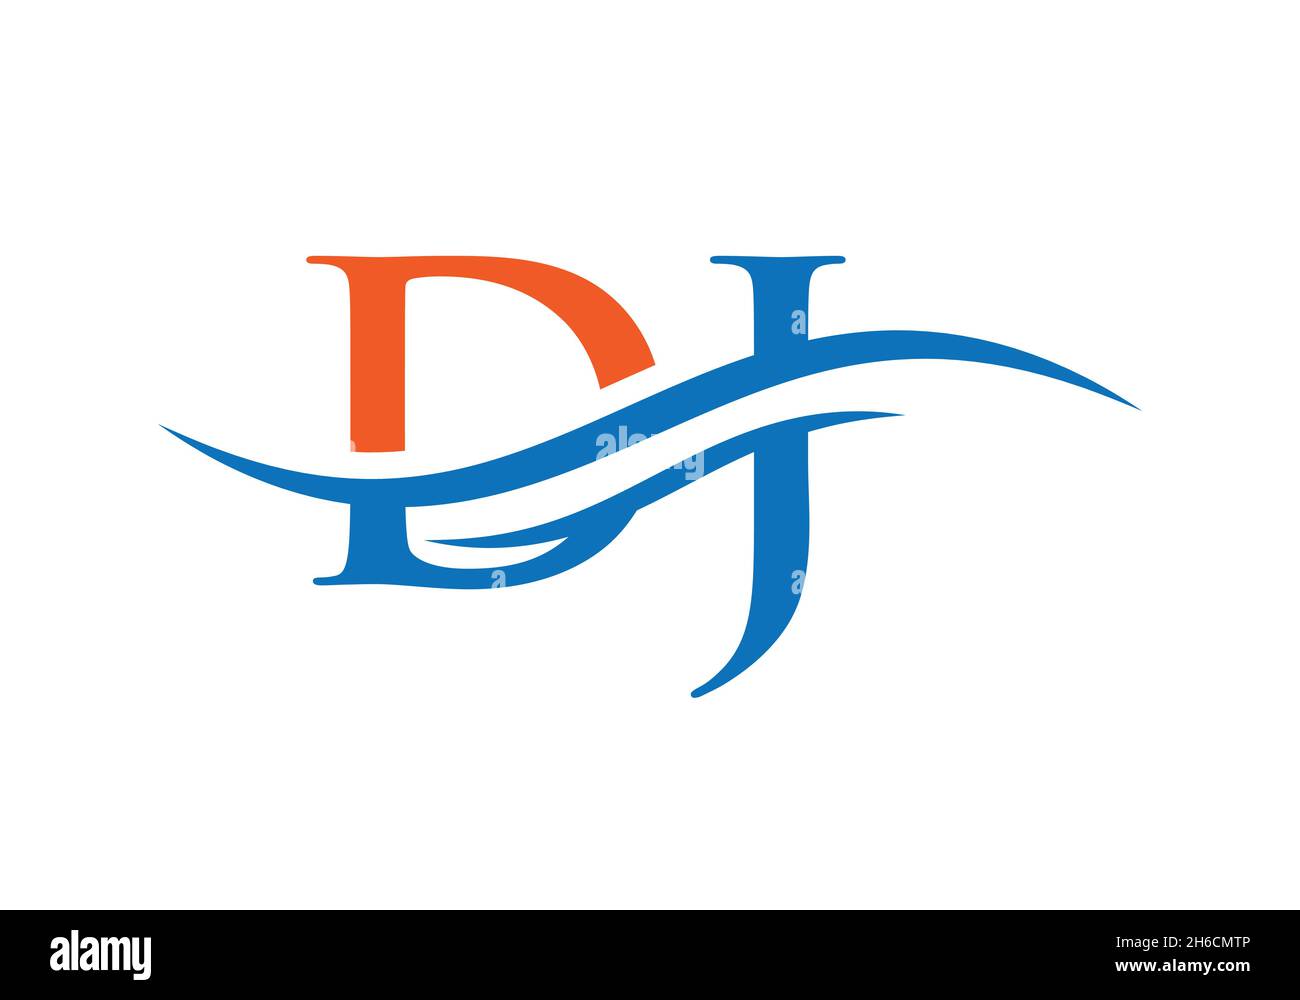 Dj logo hi-res stock photography and images - Alamy